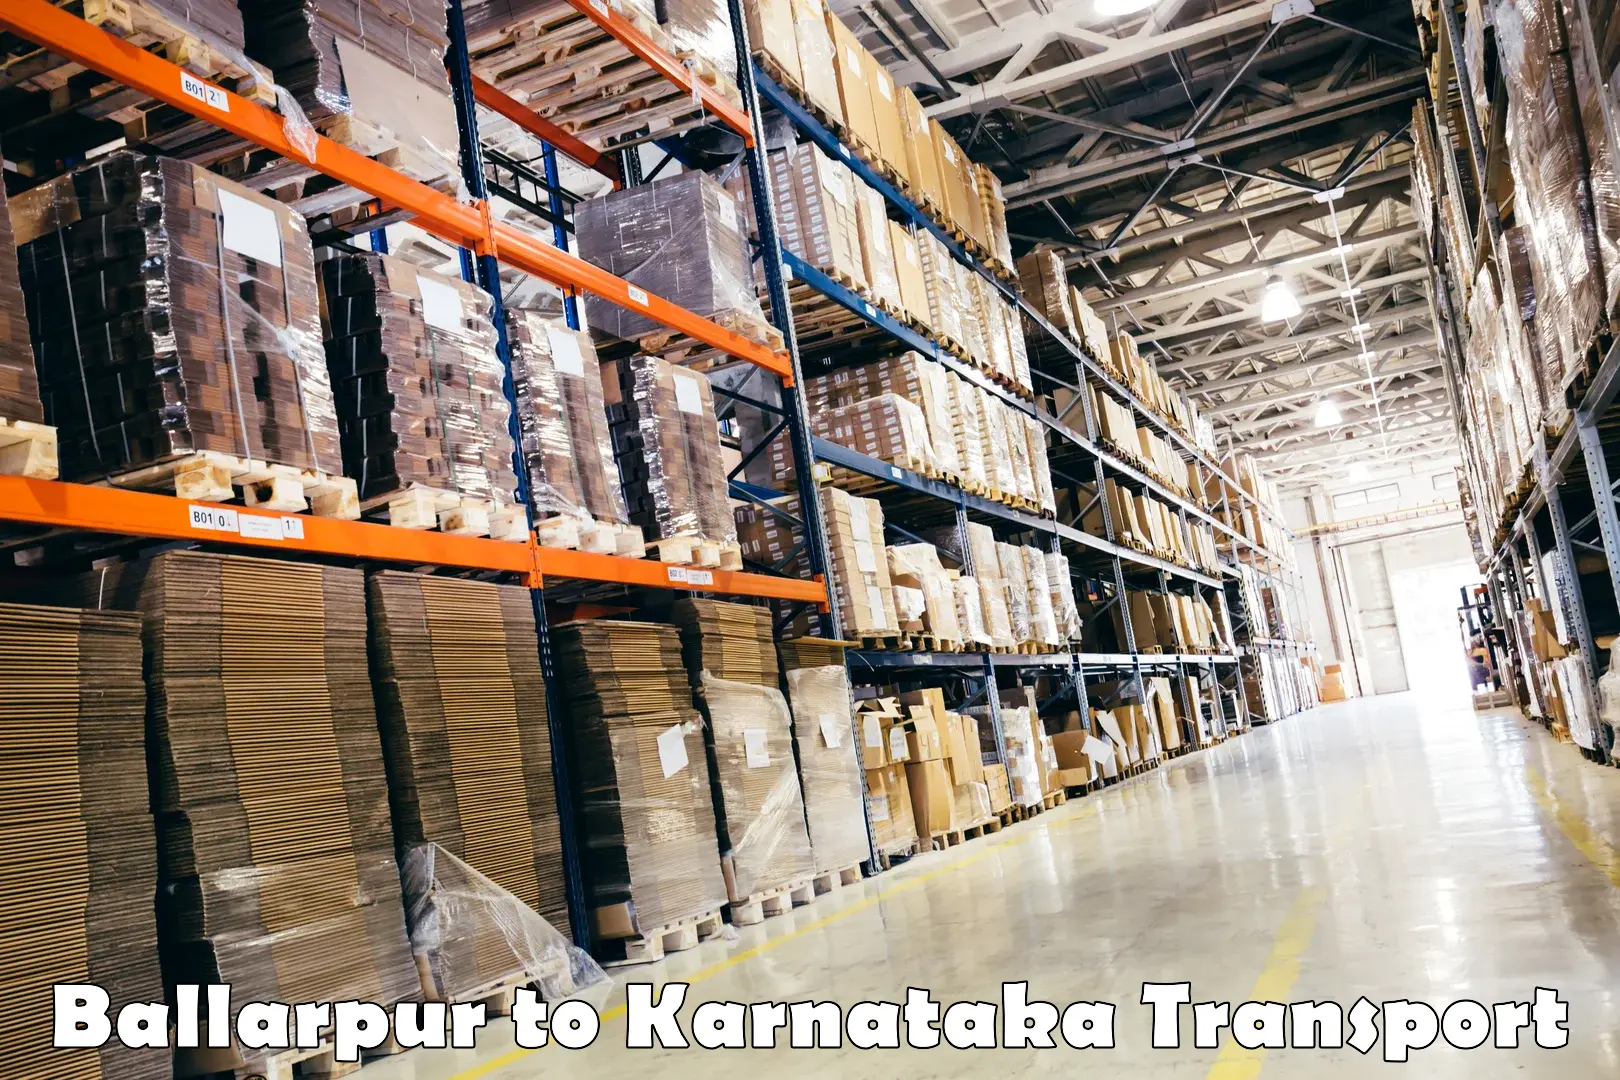 Transport in sharing Ballarpur to Karnataka